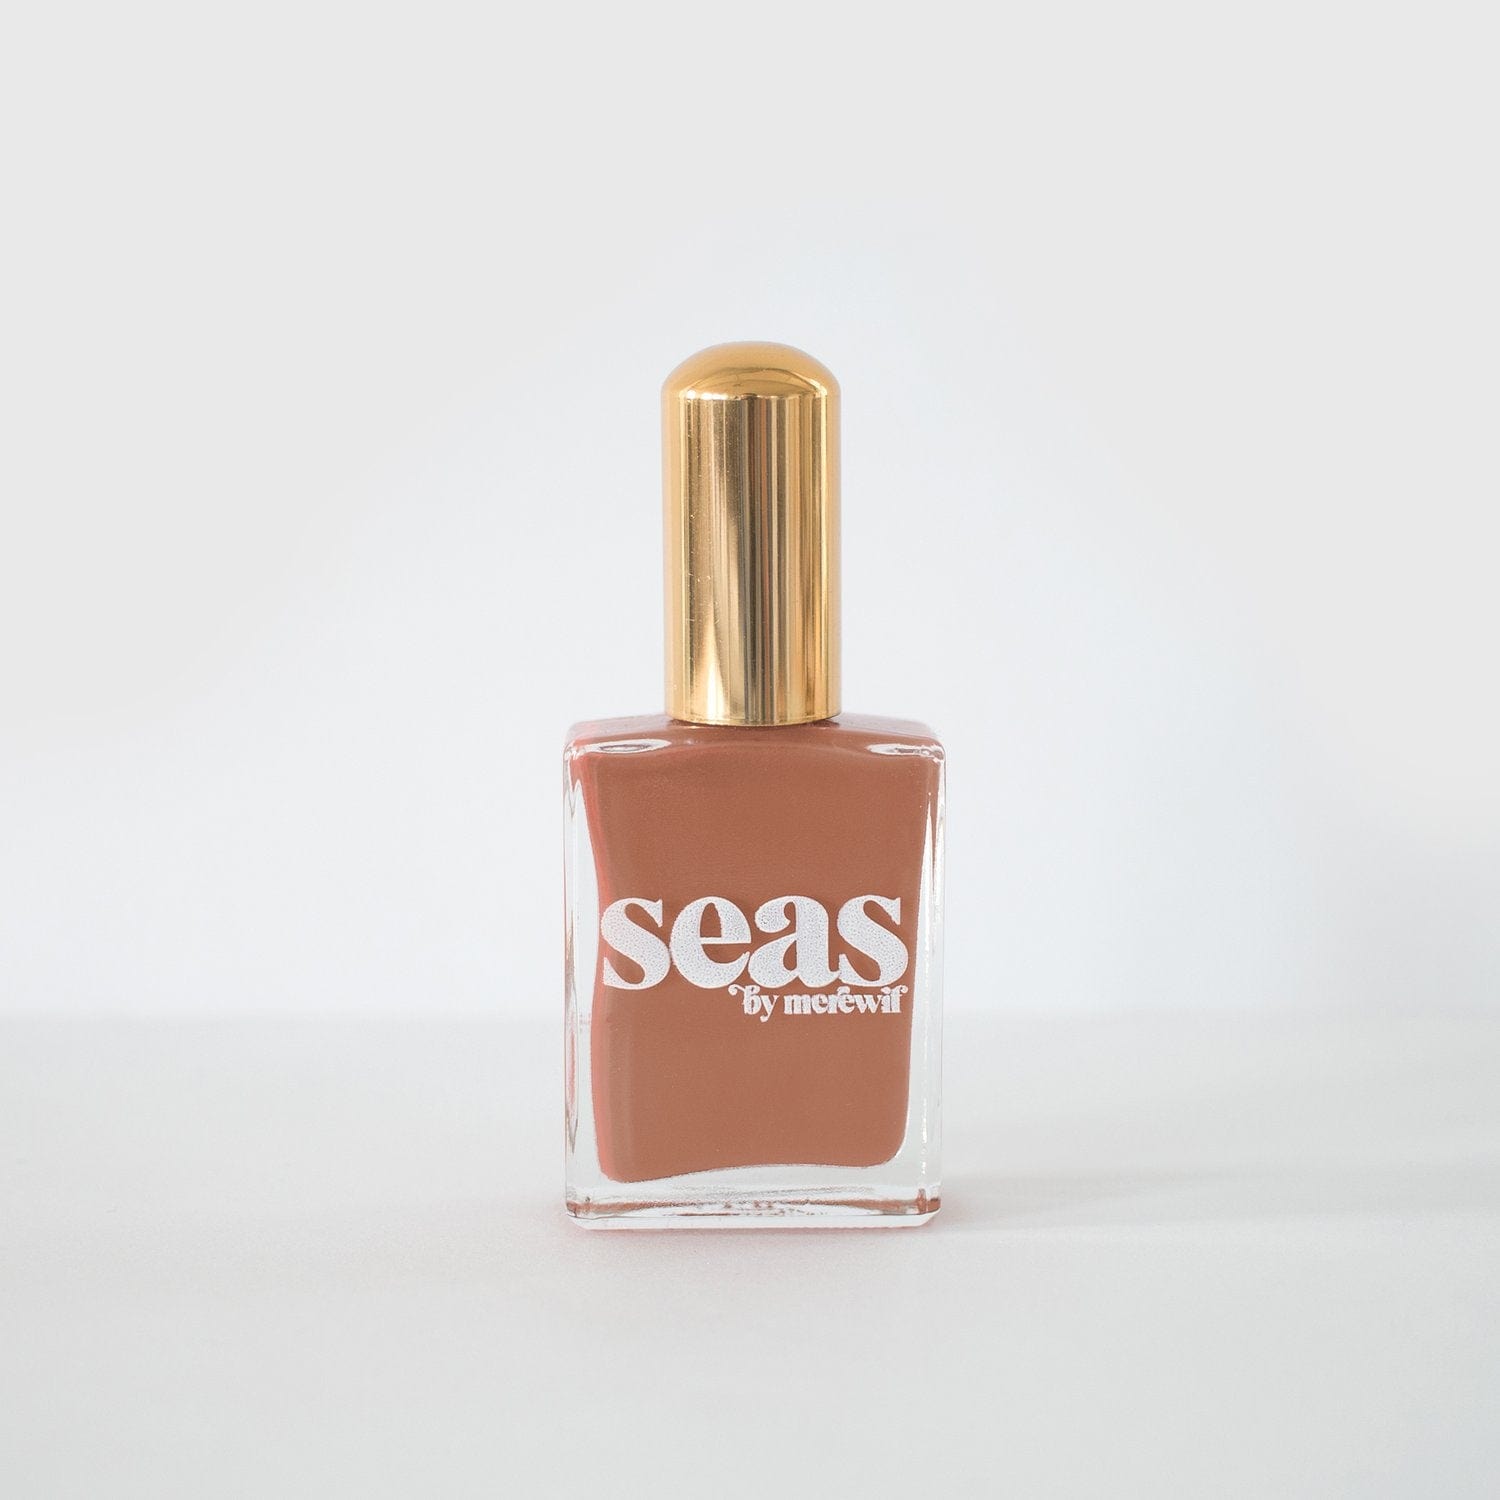 seas nail polish. La Rosa by Merewif